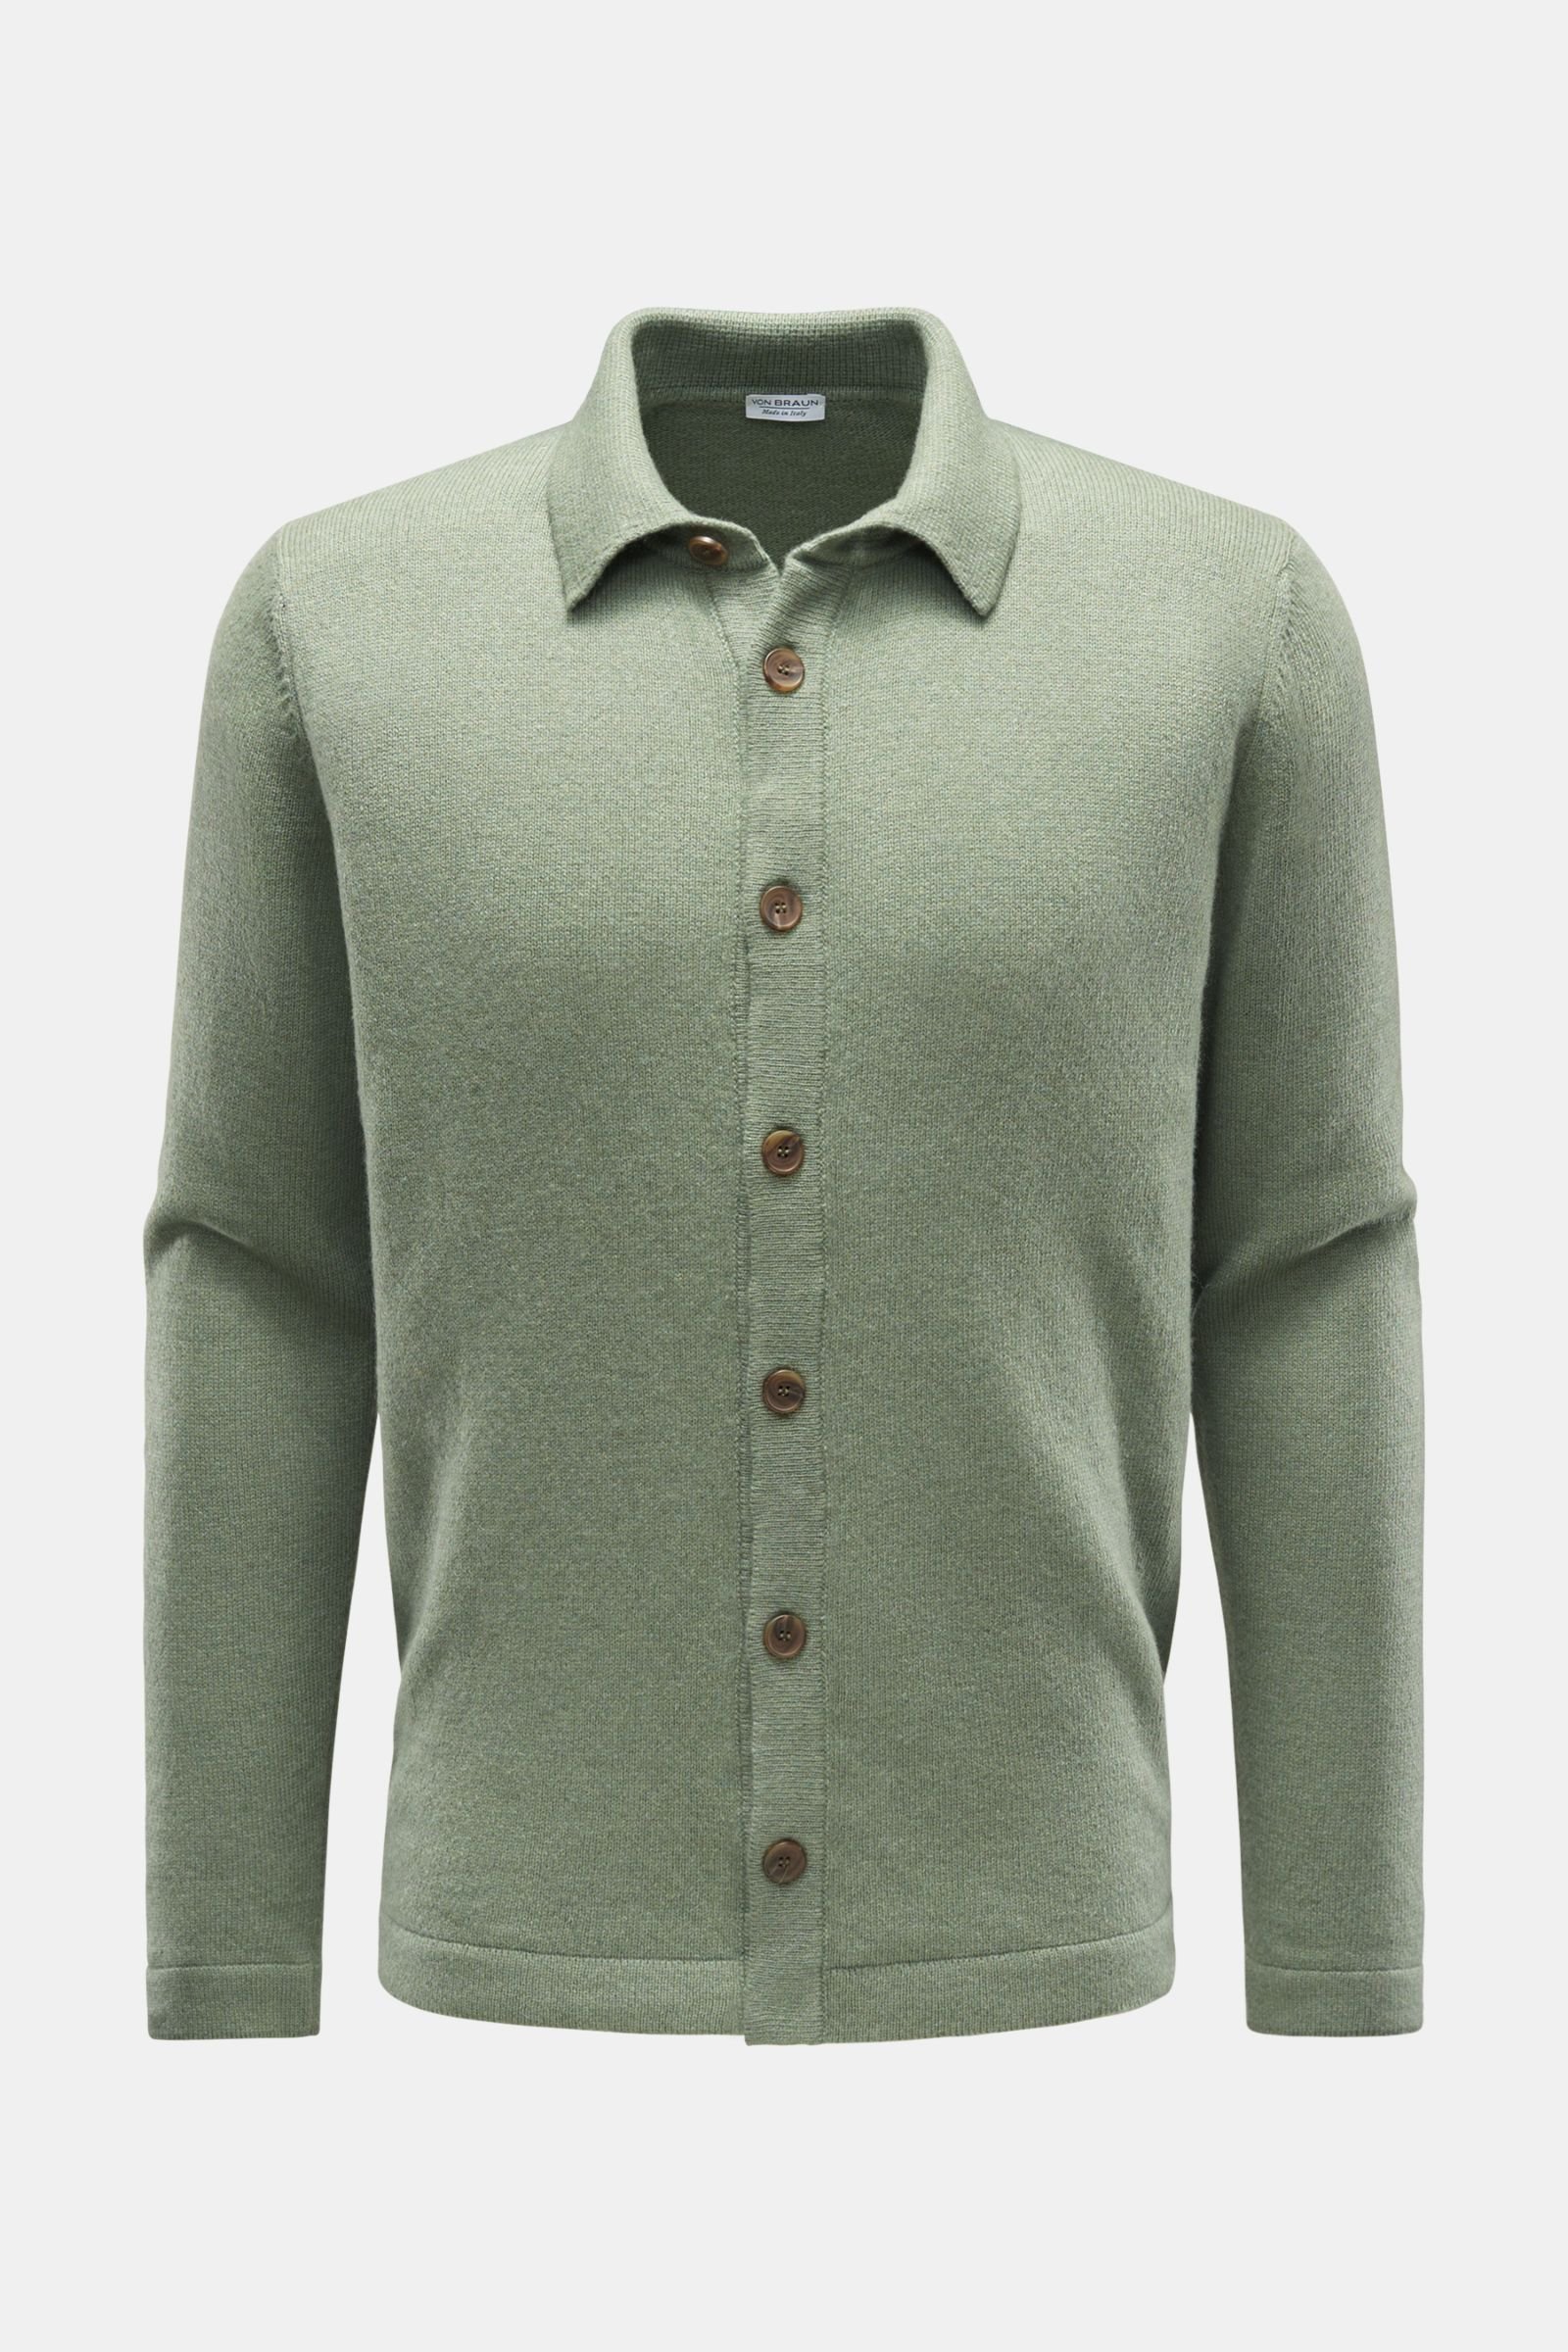 Cashmere cardigan grey-green